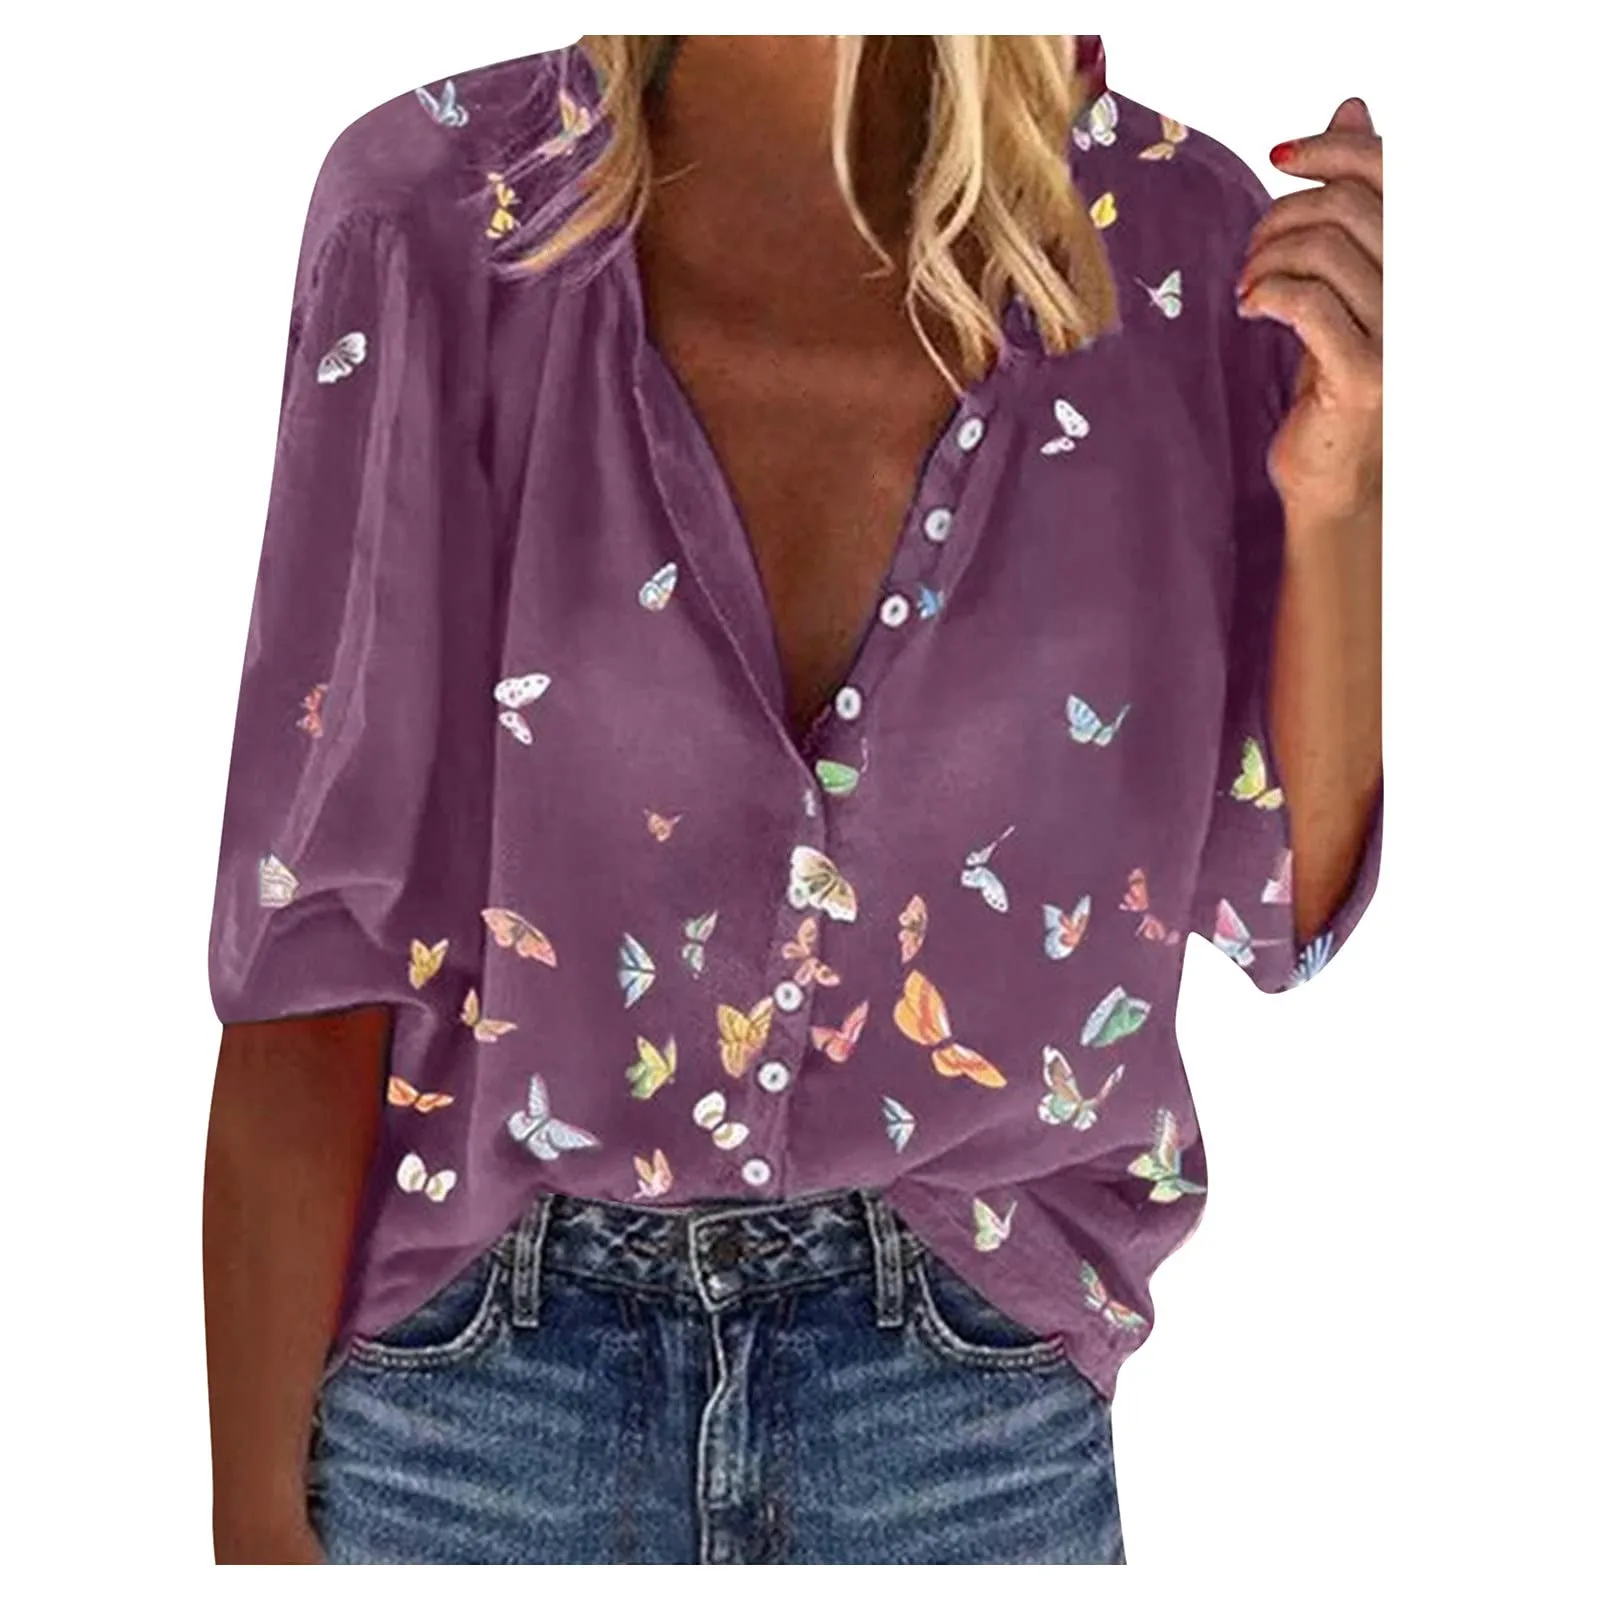 

Women's Fashion Long Sleeve Lapel Blouse Butterfly Printed Shirt Top Топы больших размеров más tamaño tops camisetas femininas